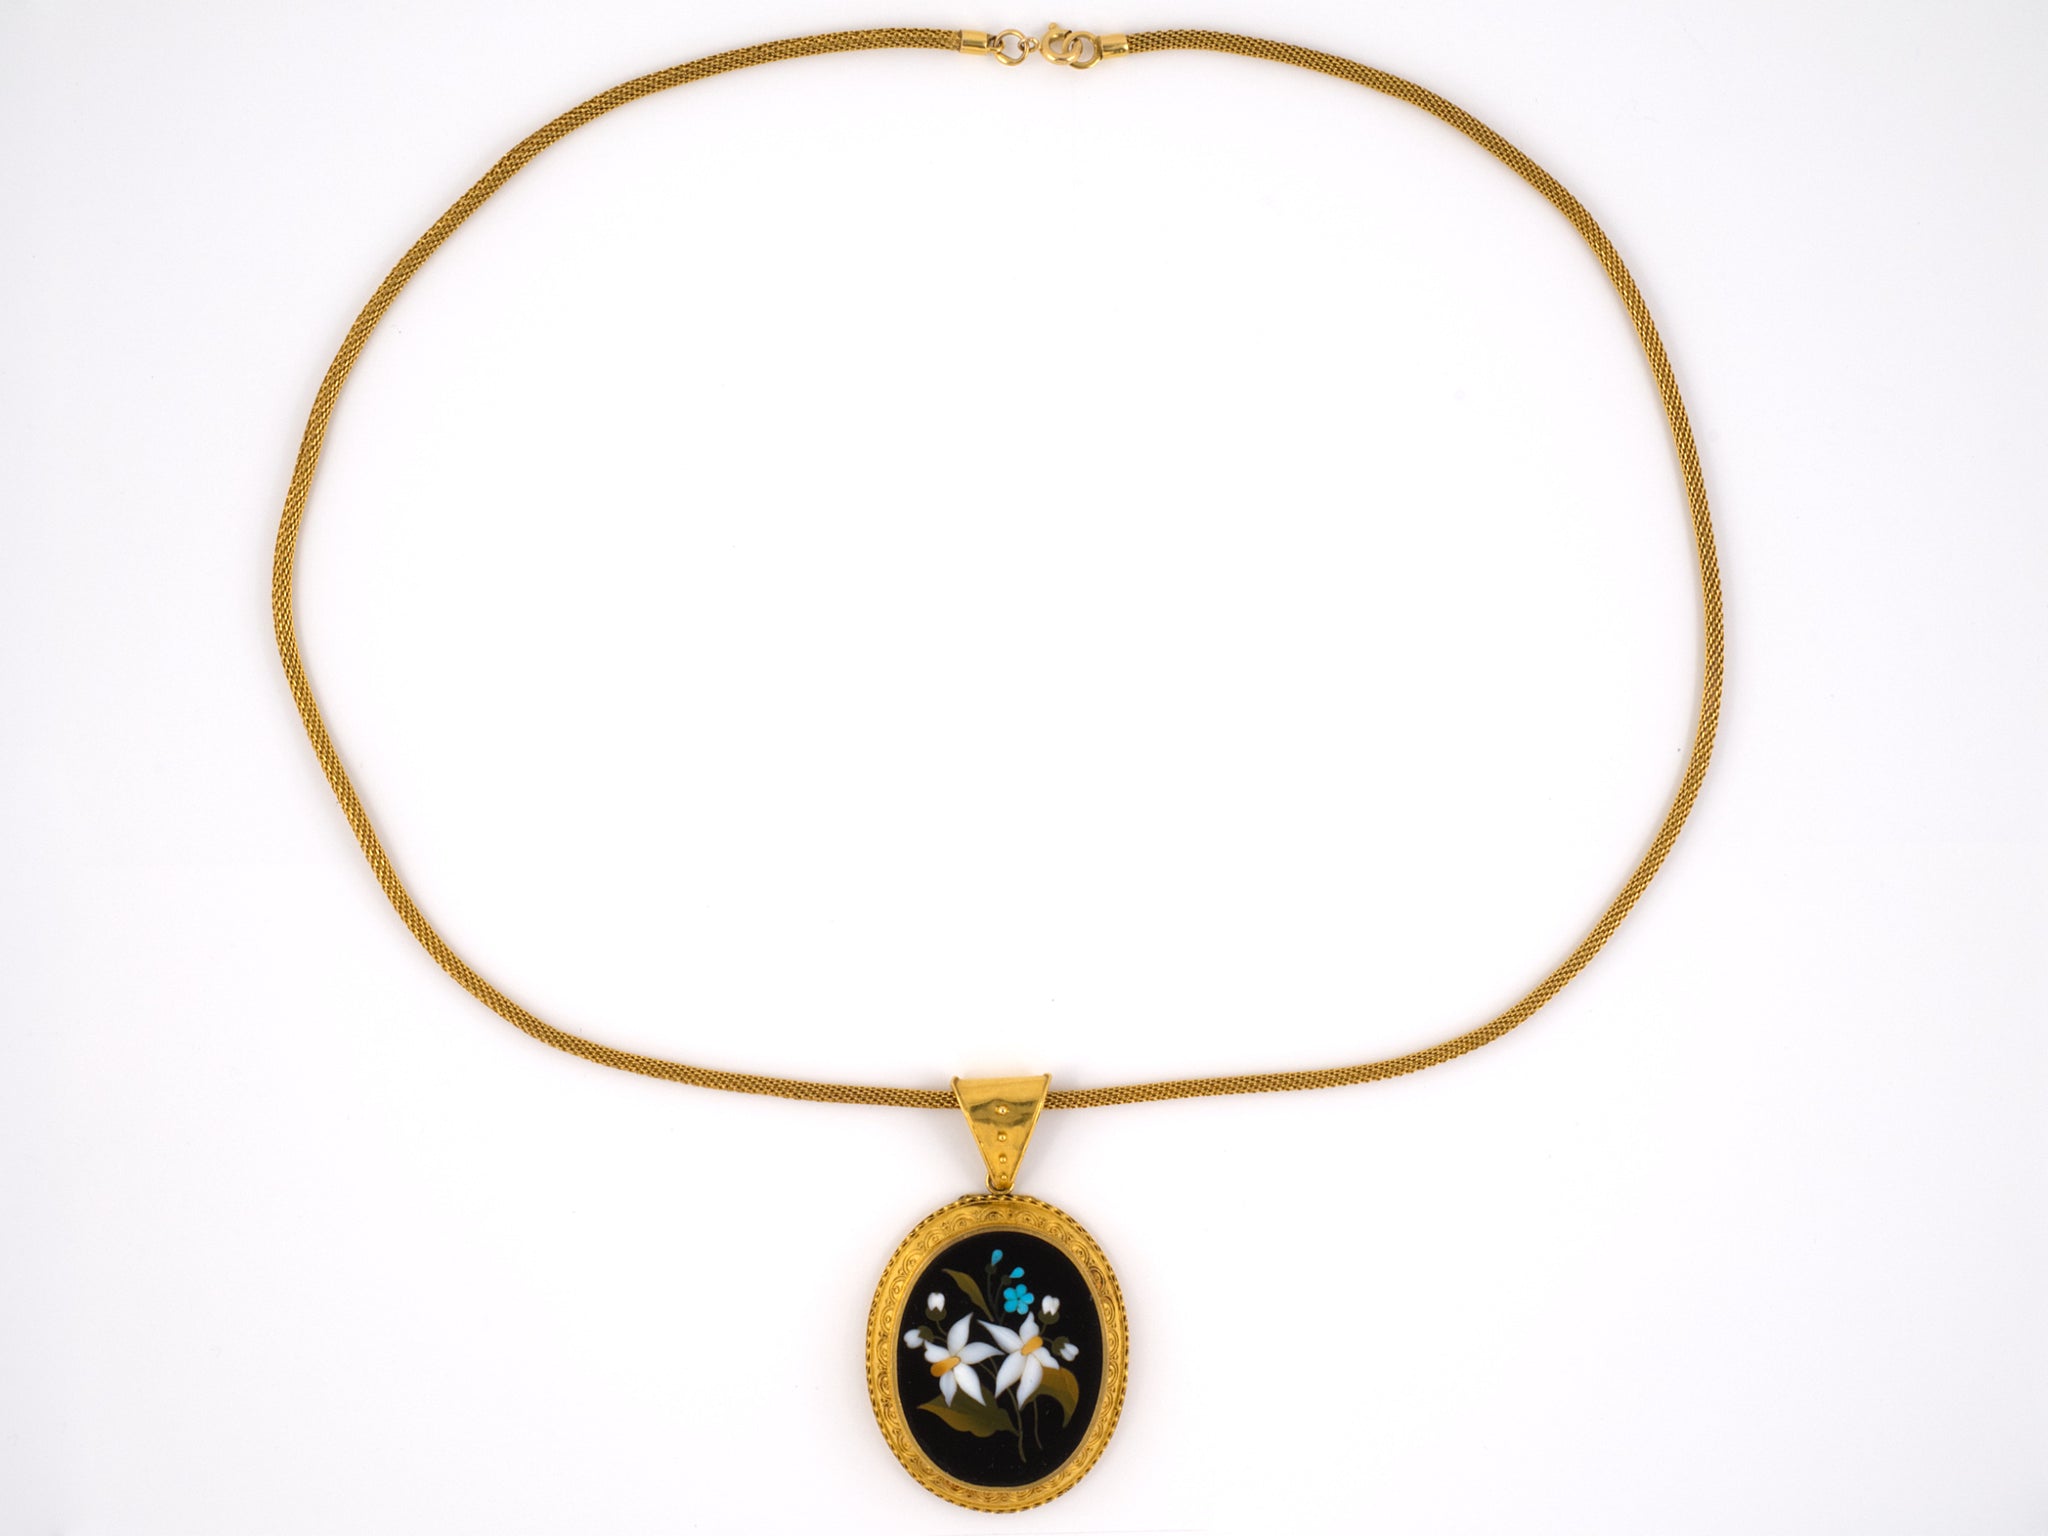 42991 - Victorian Circa 1860 Etruscan Revival Gold Flower Locket